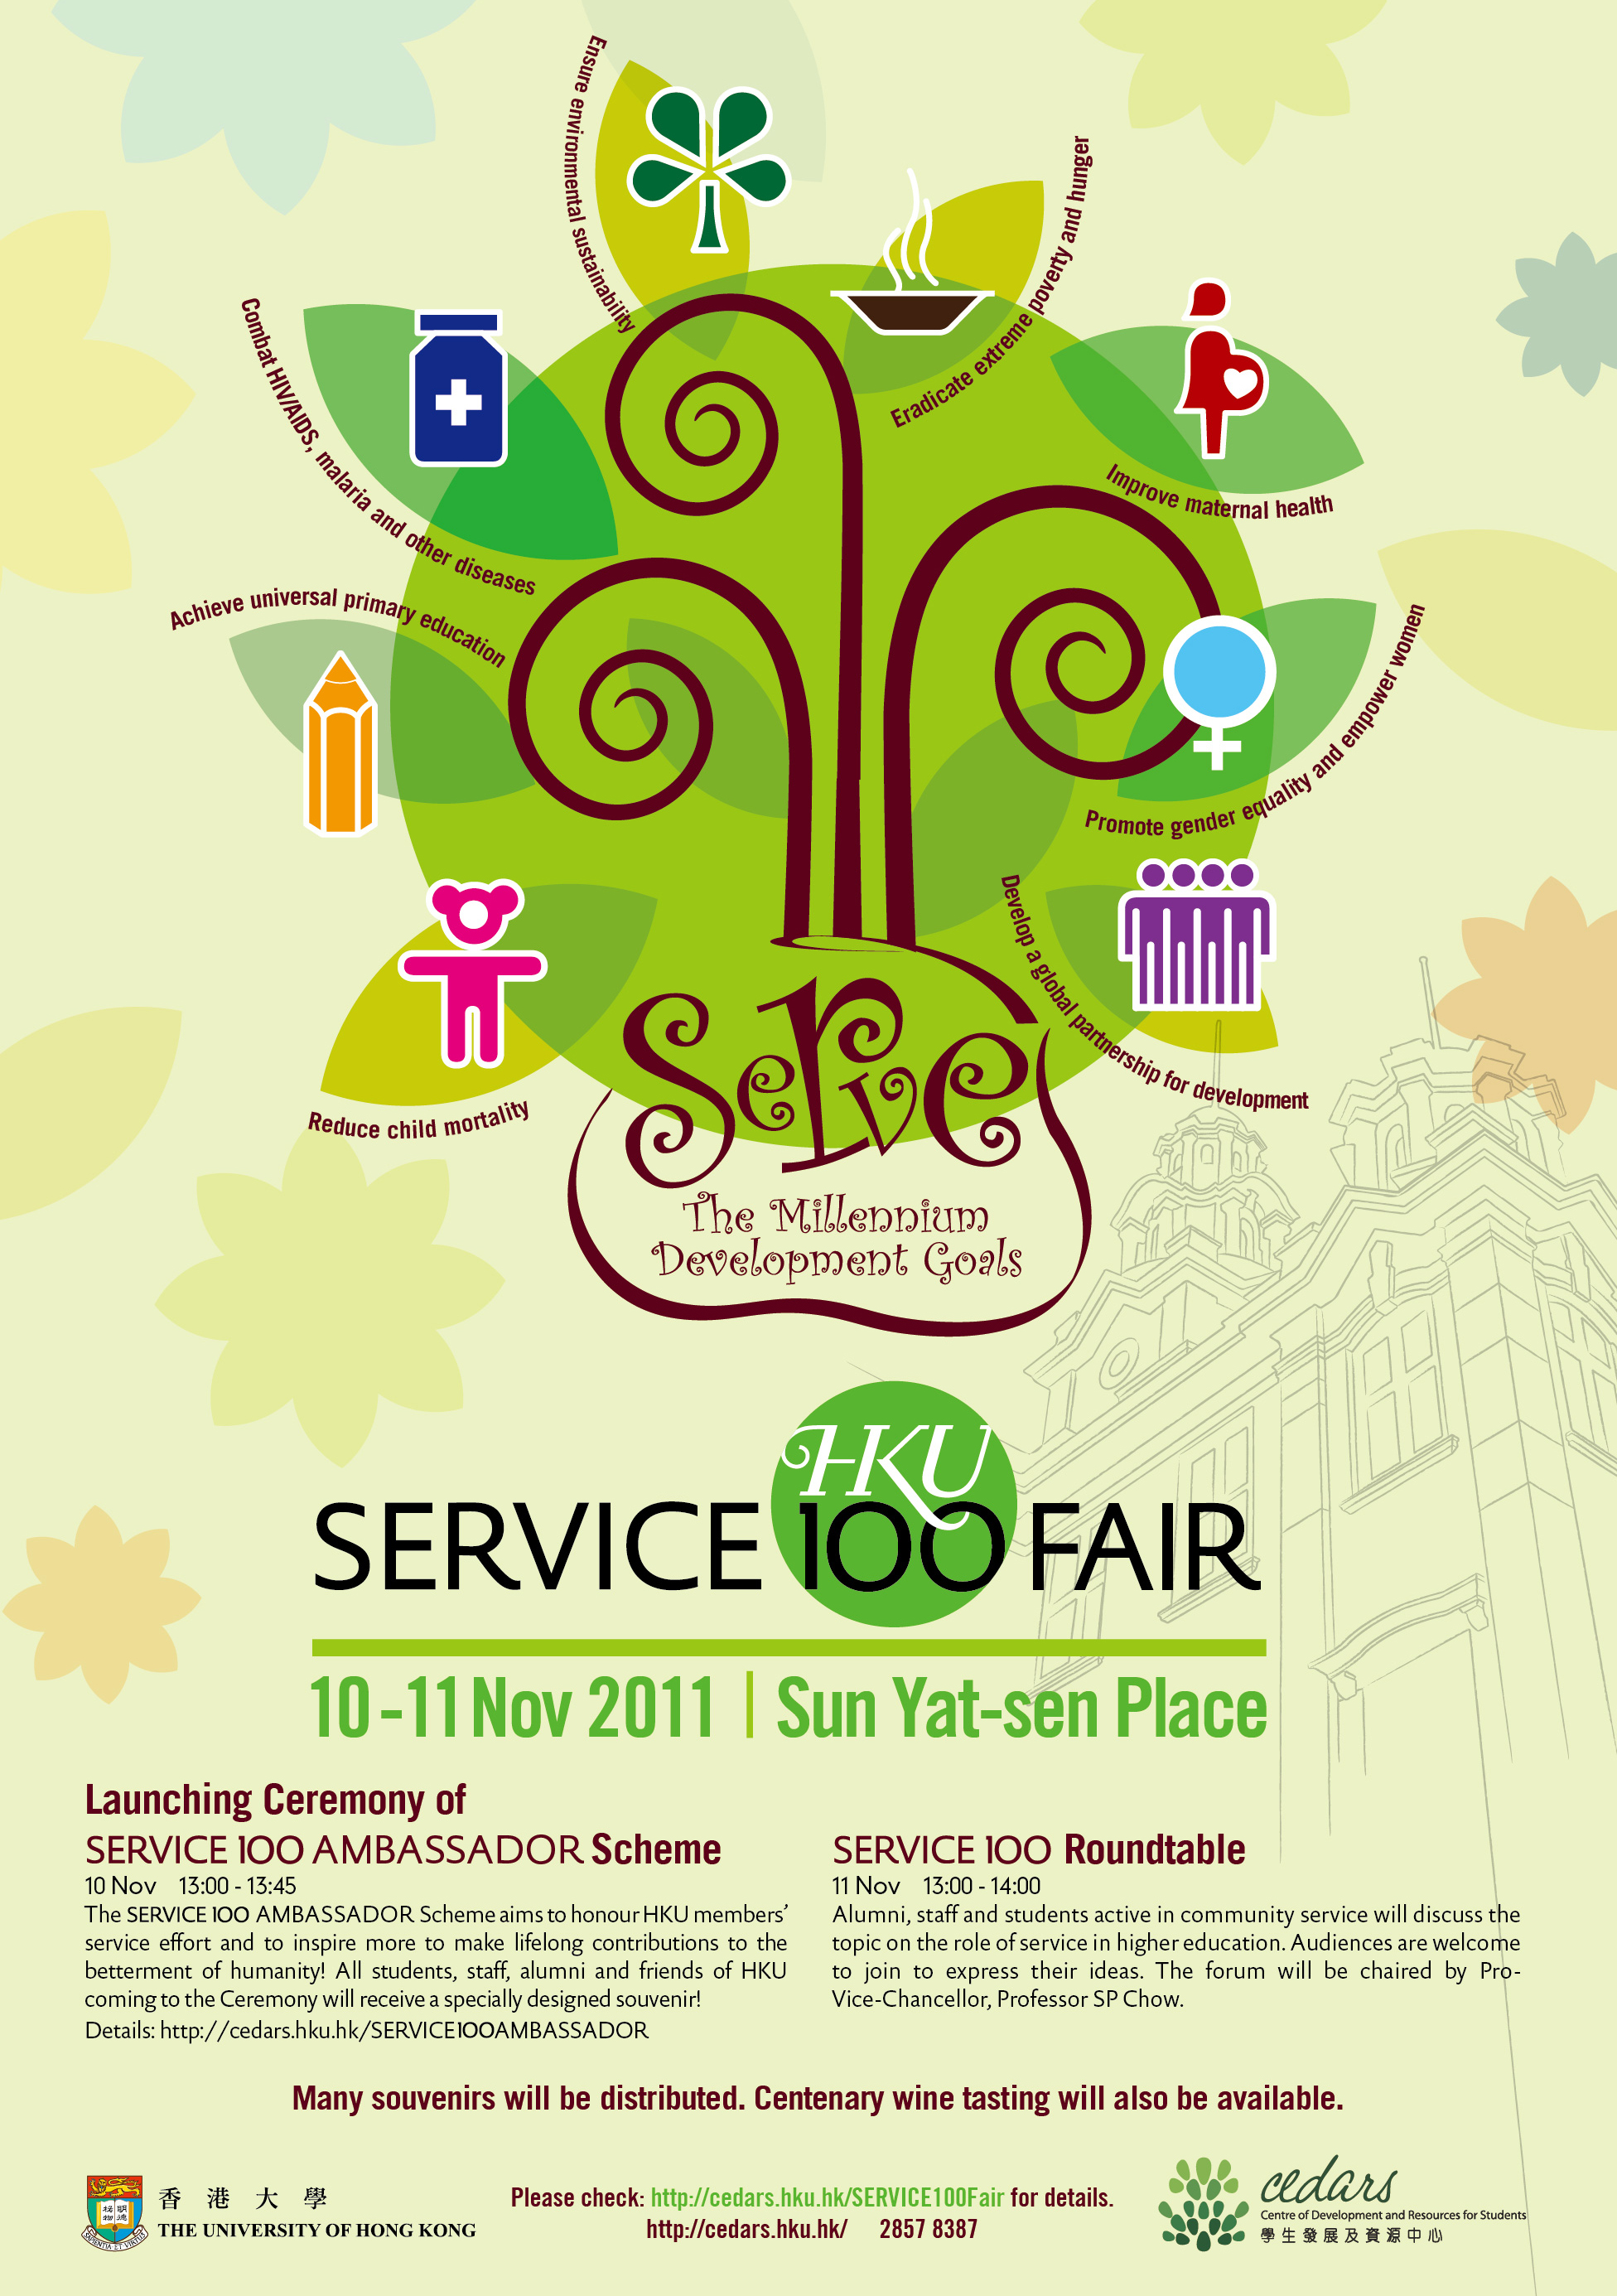 HKU SERVICE 100 FAIR : 10 Nov -Launching Ceremony of SERVICE100 AMBASSADOR Scheme, 11 Nov- SERVICE100 Roundtable